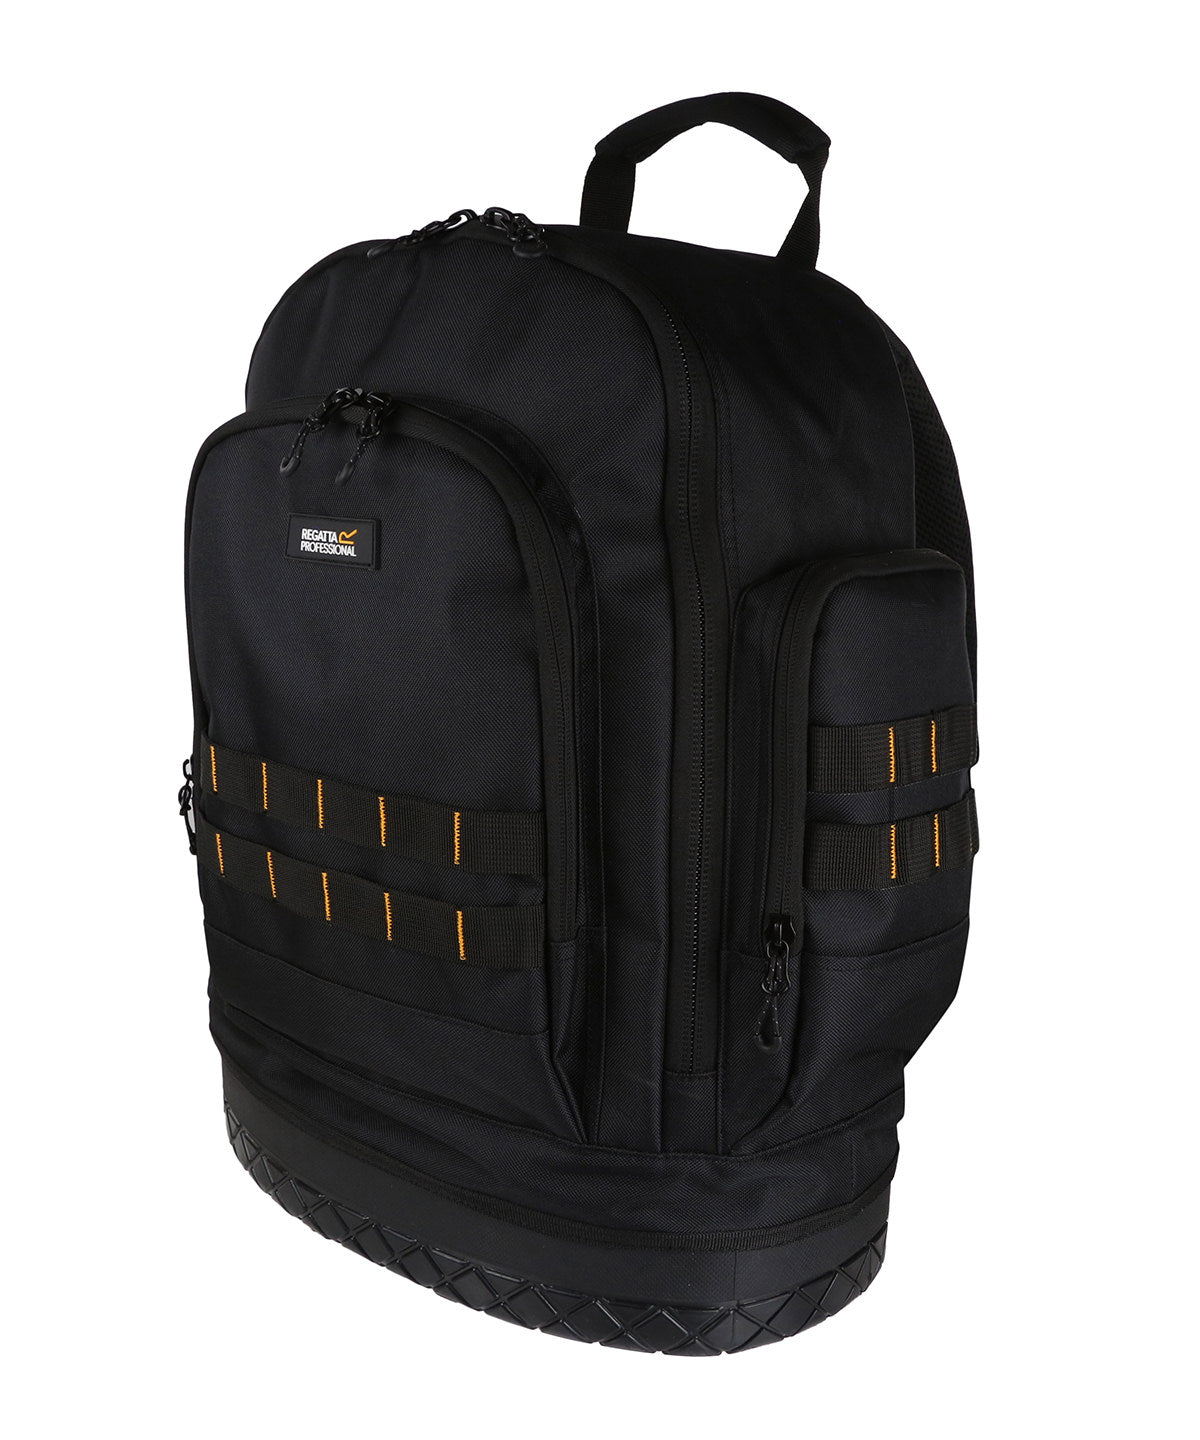 Töskur - Premium 30L Tool Backpack